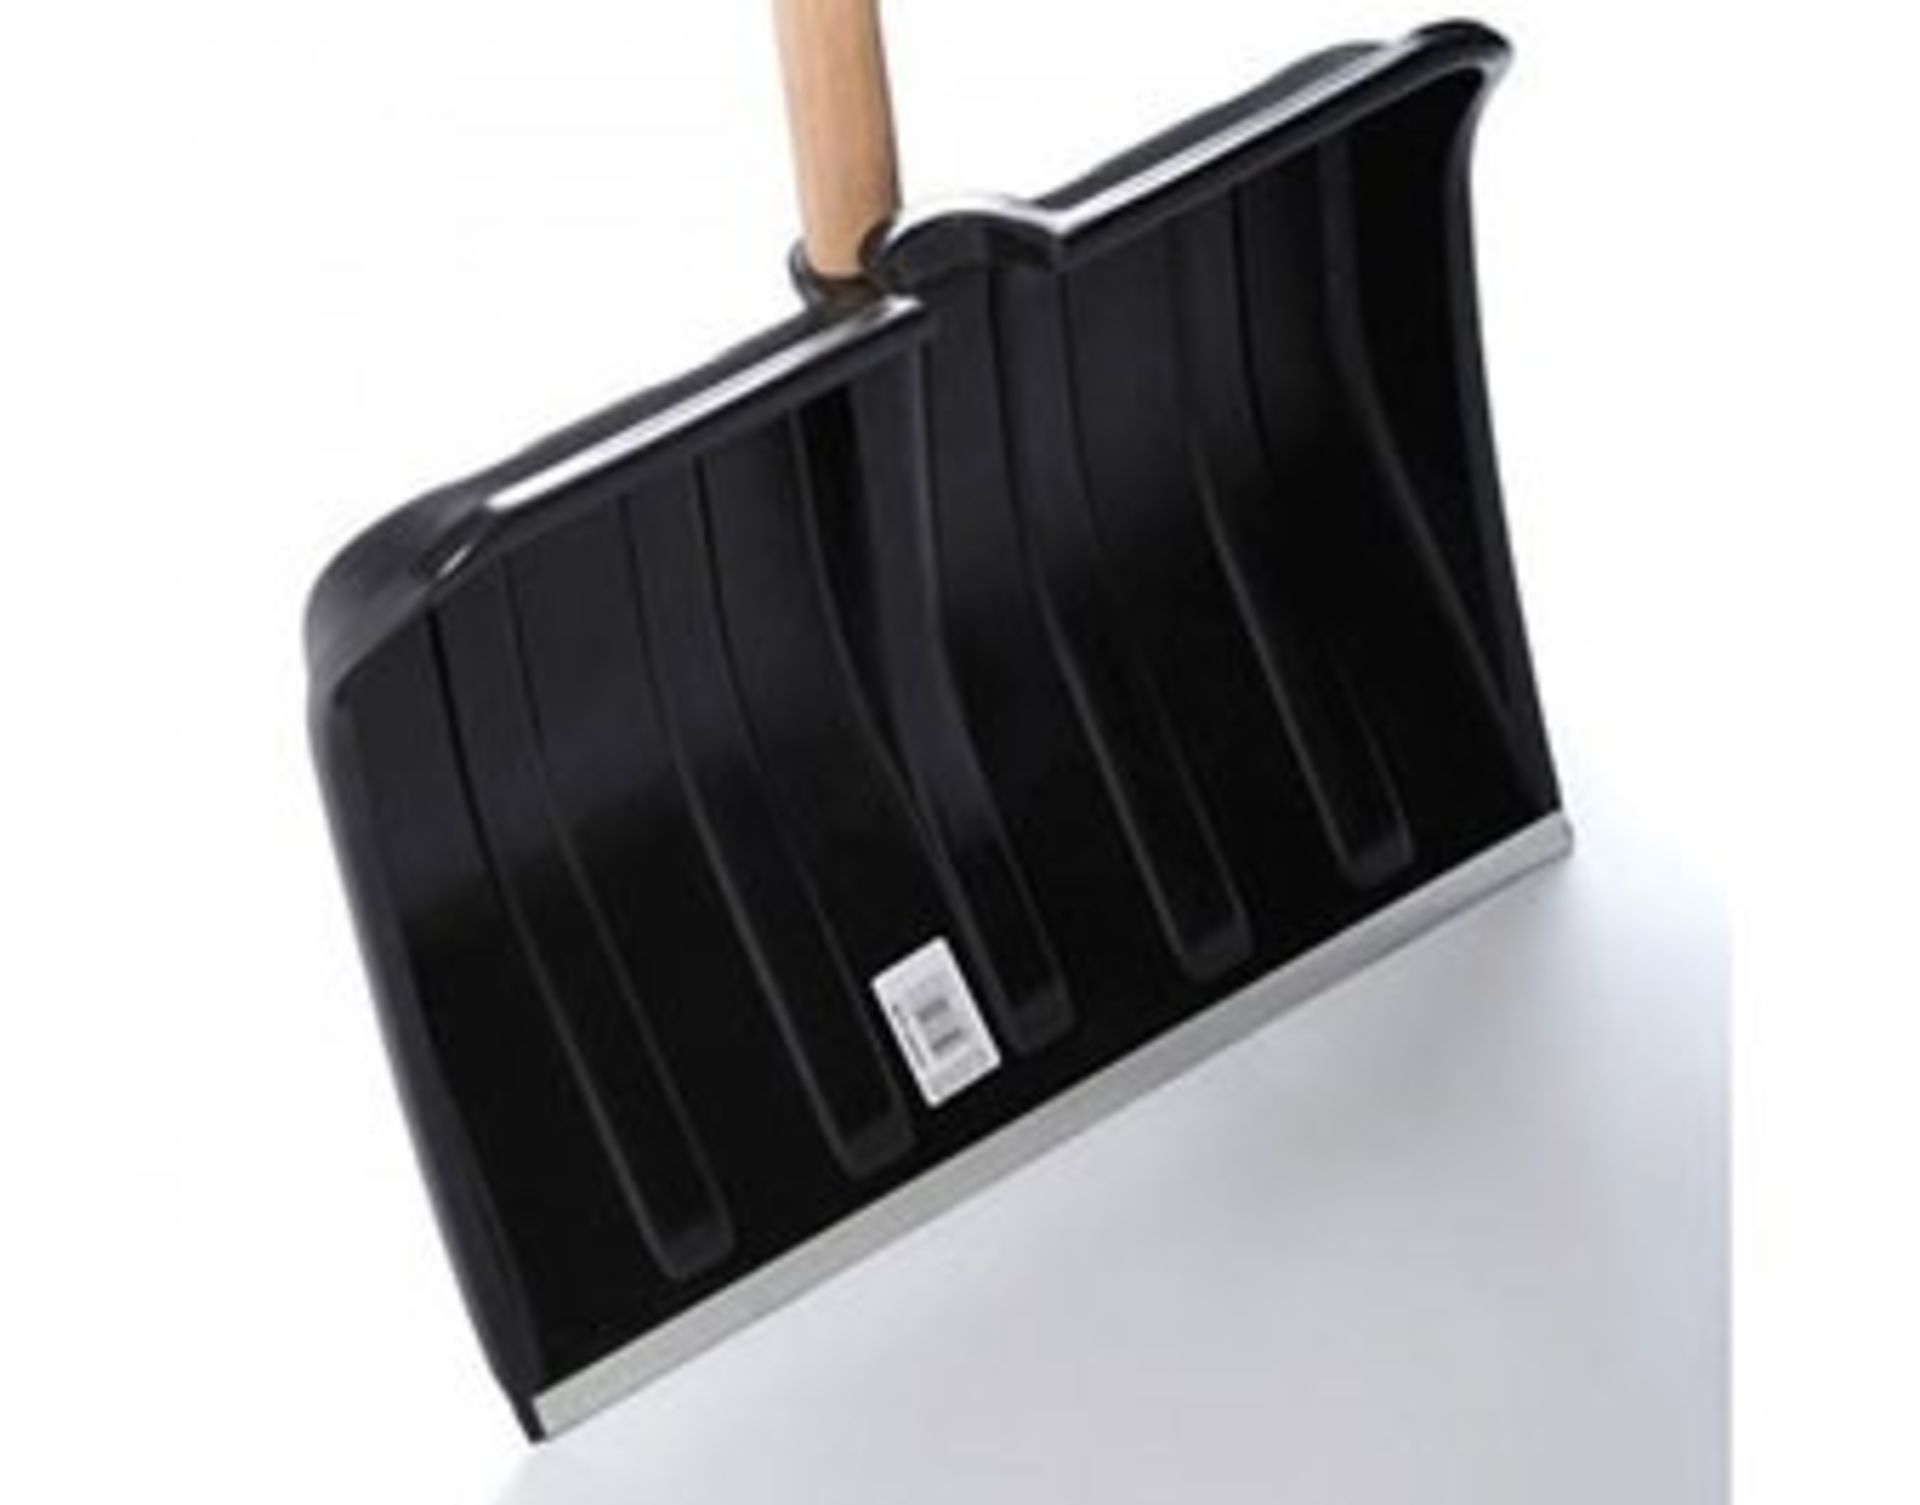 100 x Aleco 47 Black Multi Purpose Shovel with Metal Edge